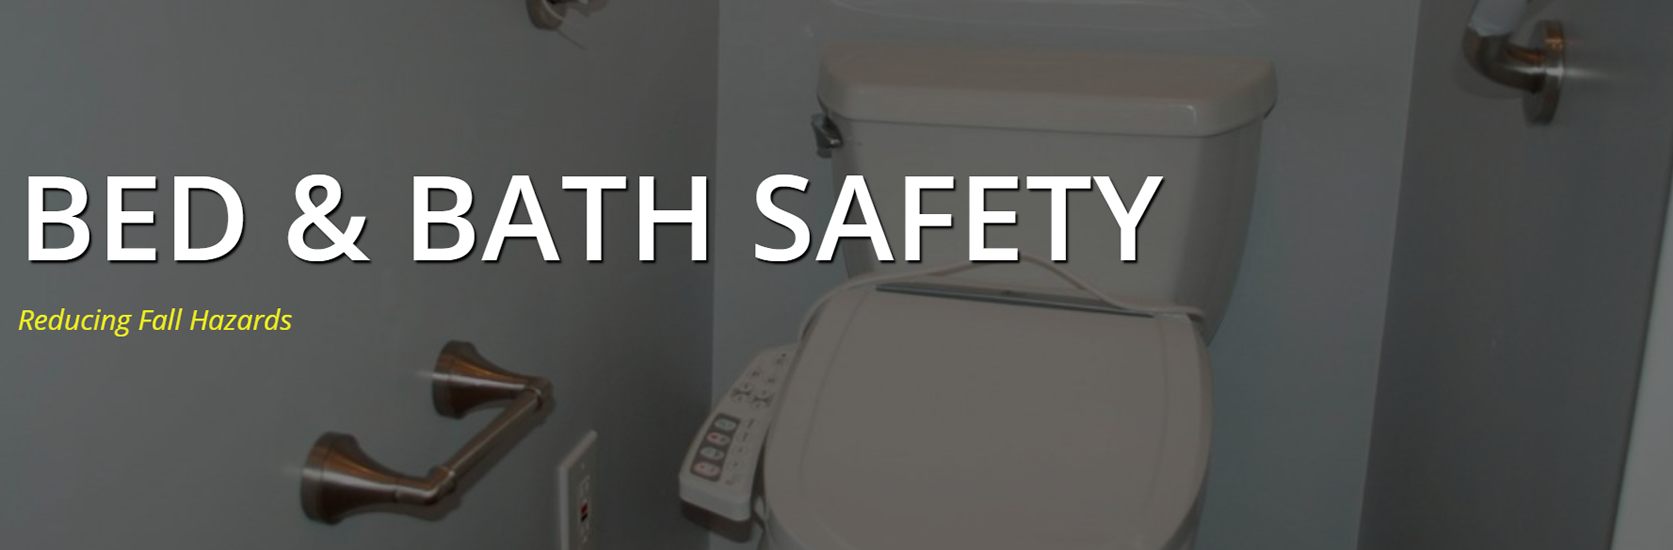 bedandbathroom_safety.png